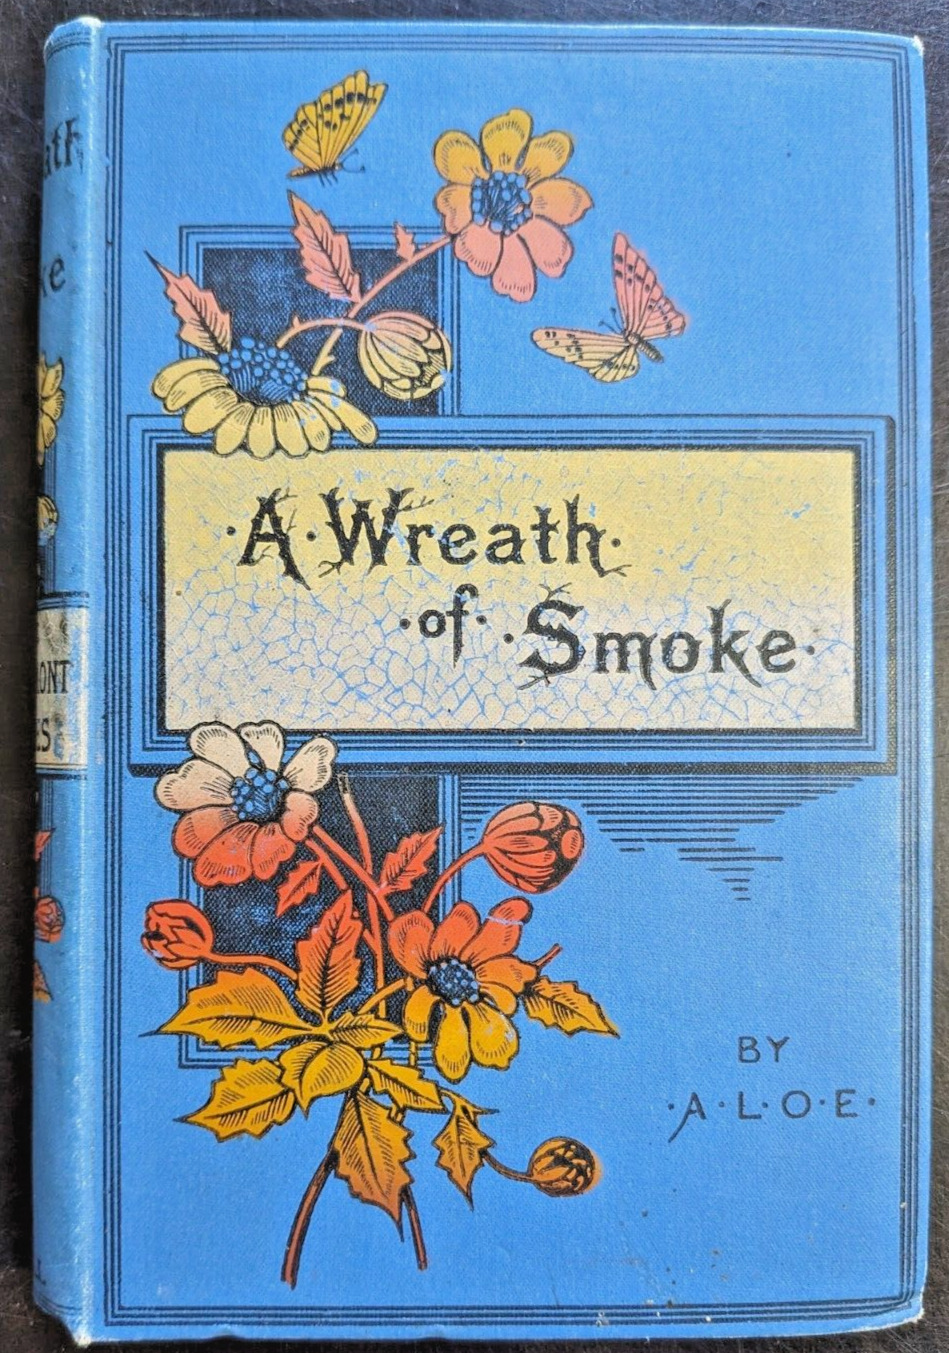 A Wreath of Smoke A.L.O.E. Rare Antique Hardcover Book Literature Revell 1890s